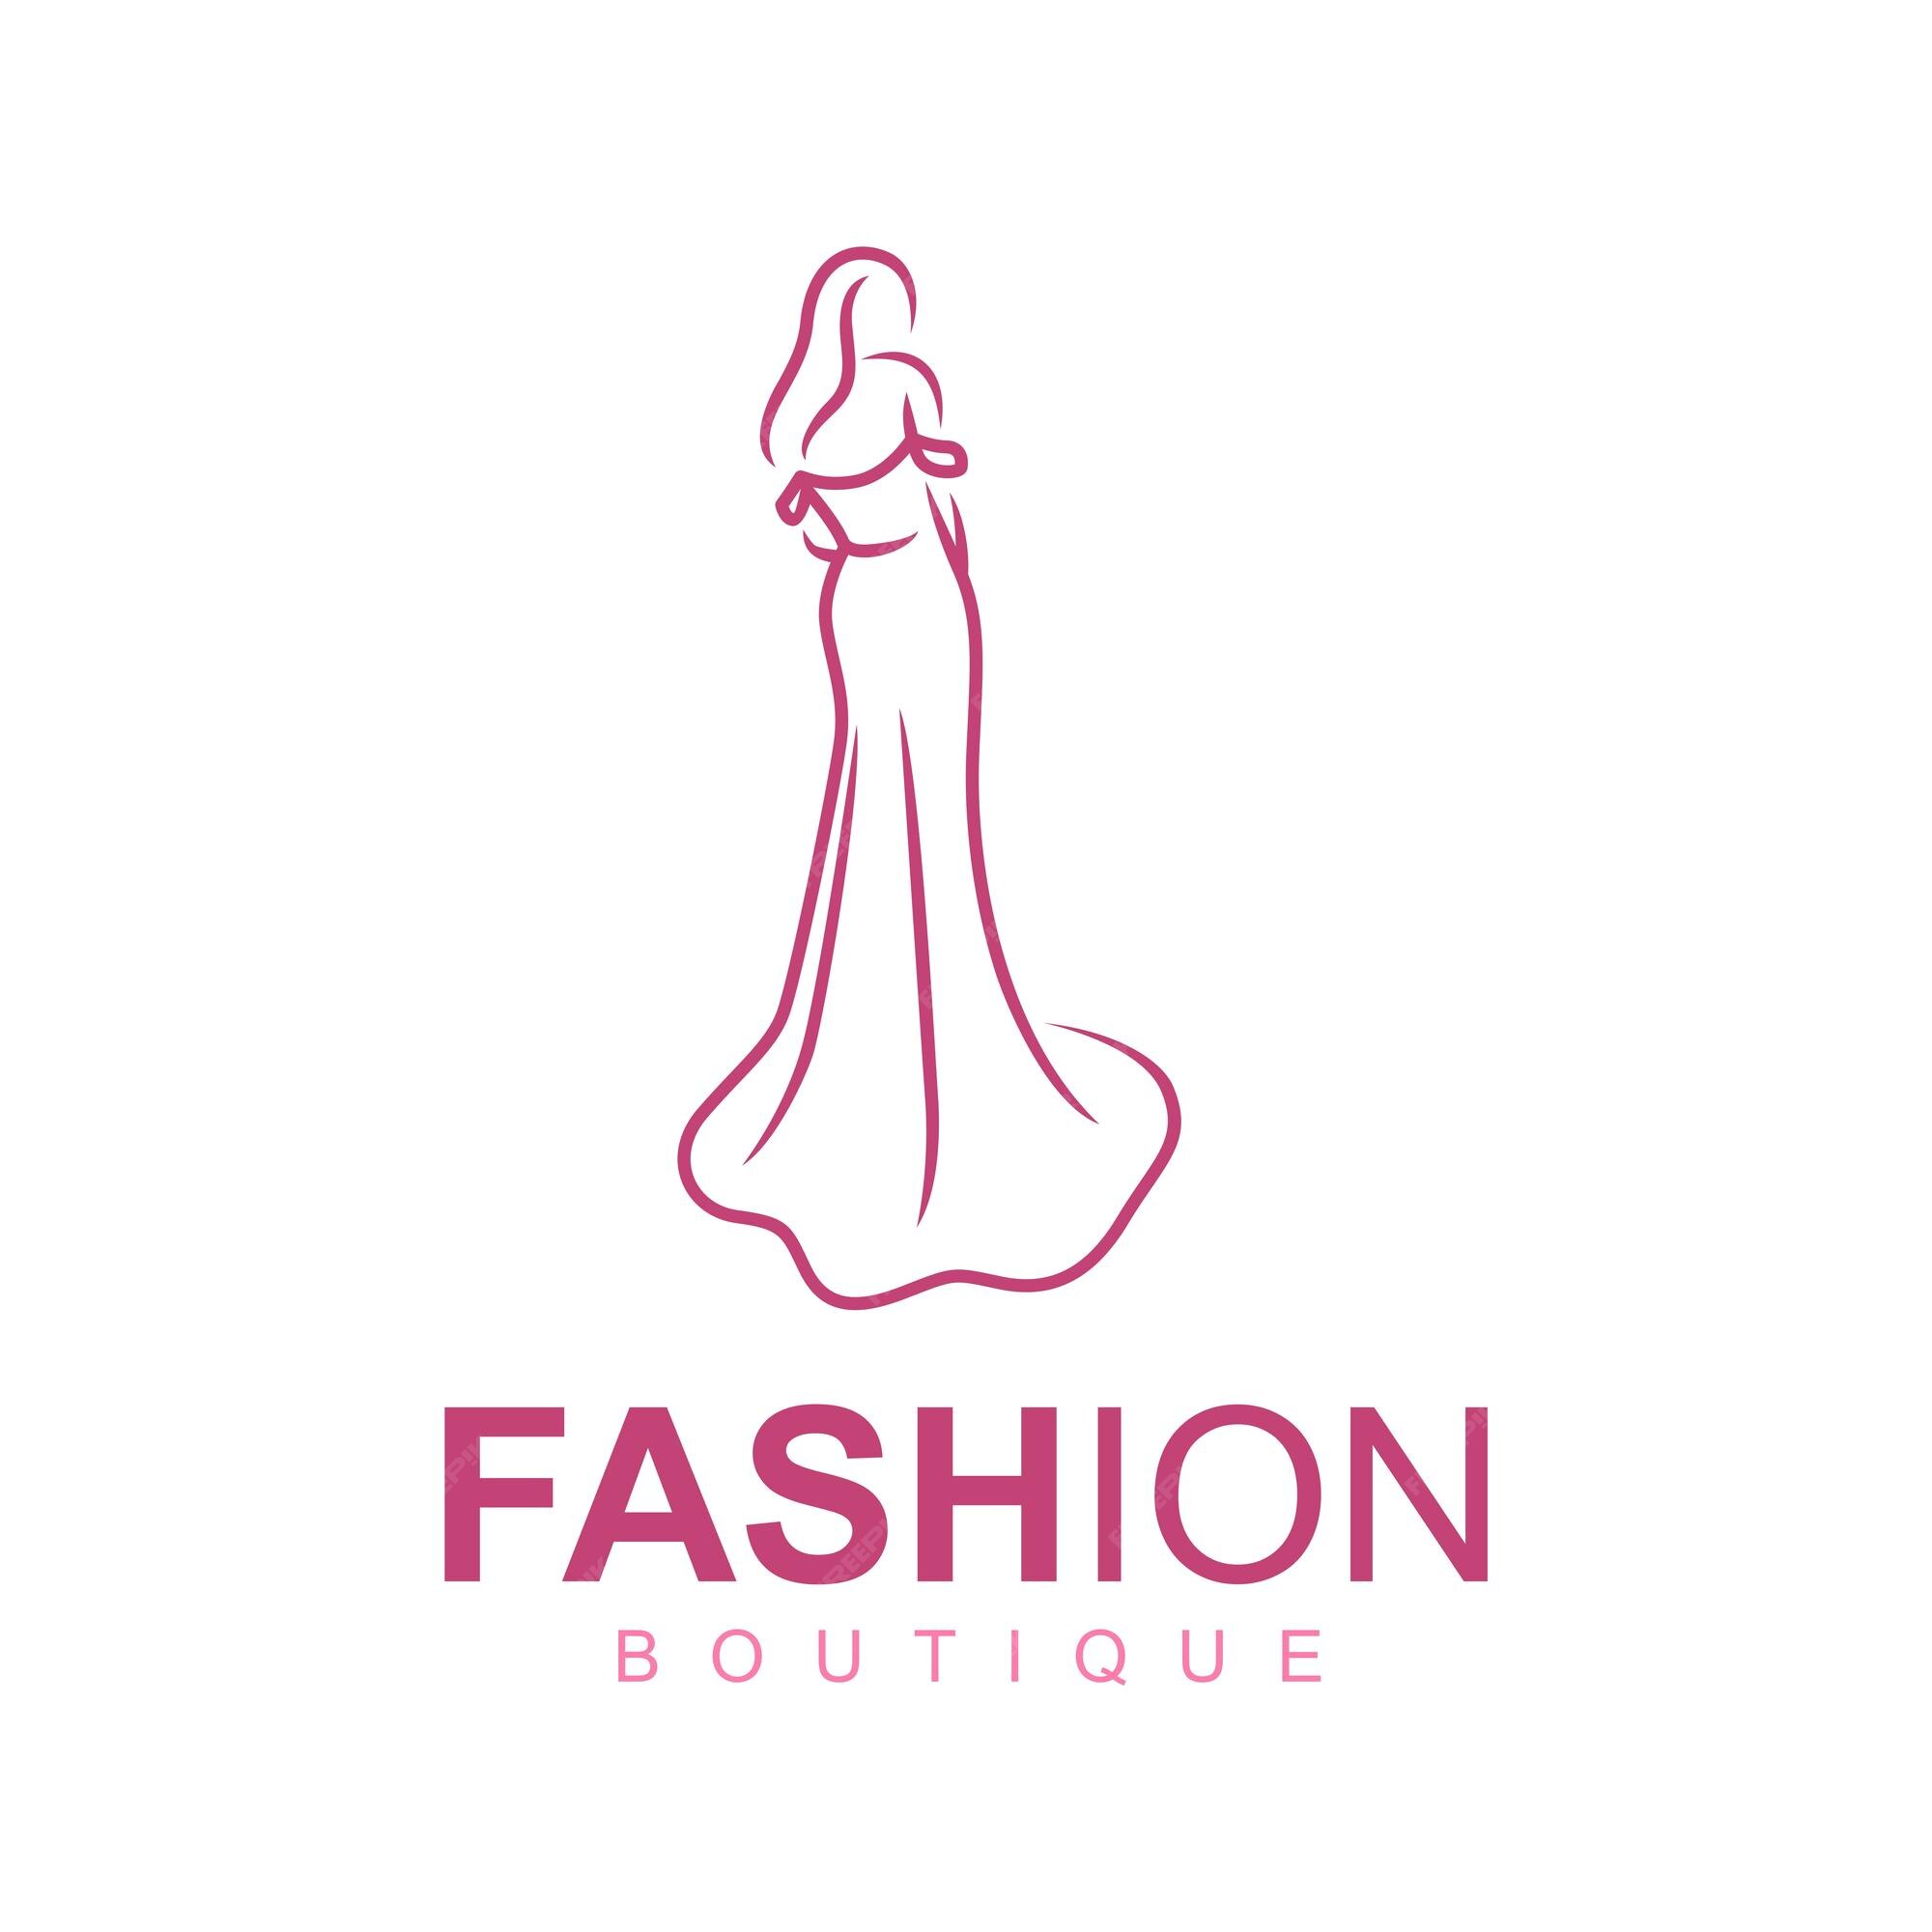 Premium Vector | Minimal boutique fashion logo